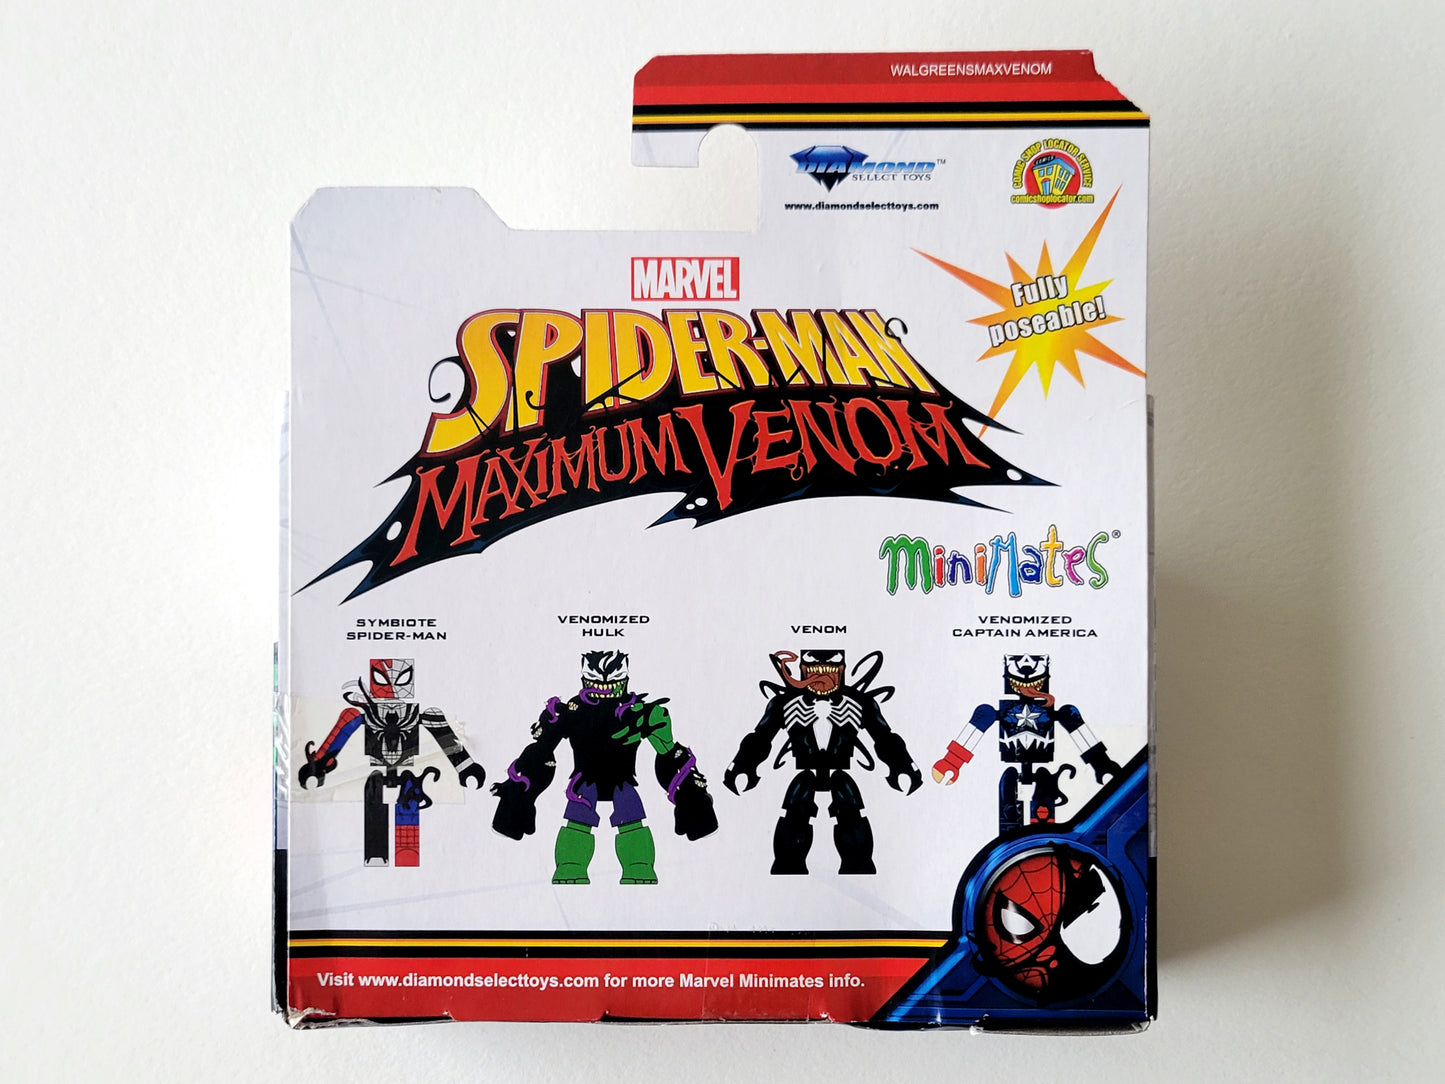 Spider-Man Maximum Venom Minimates Walgreens Exclusive Symbiote Spider-Man & Venomized Hulk